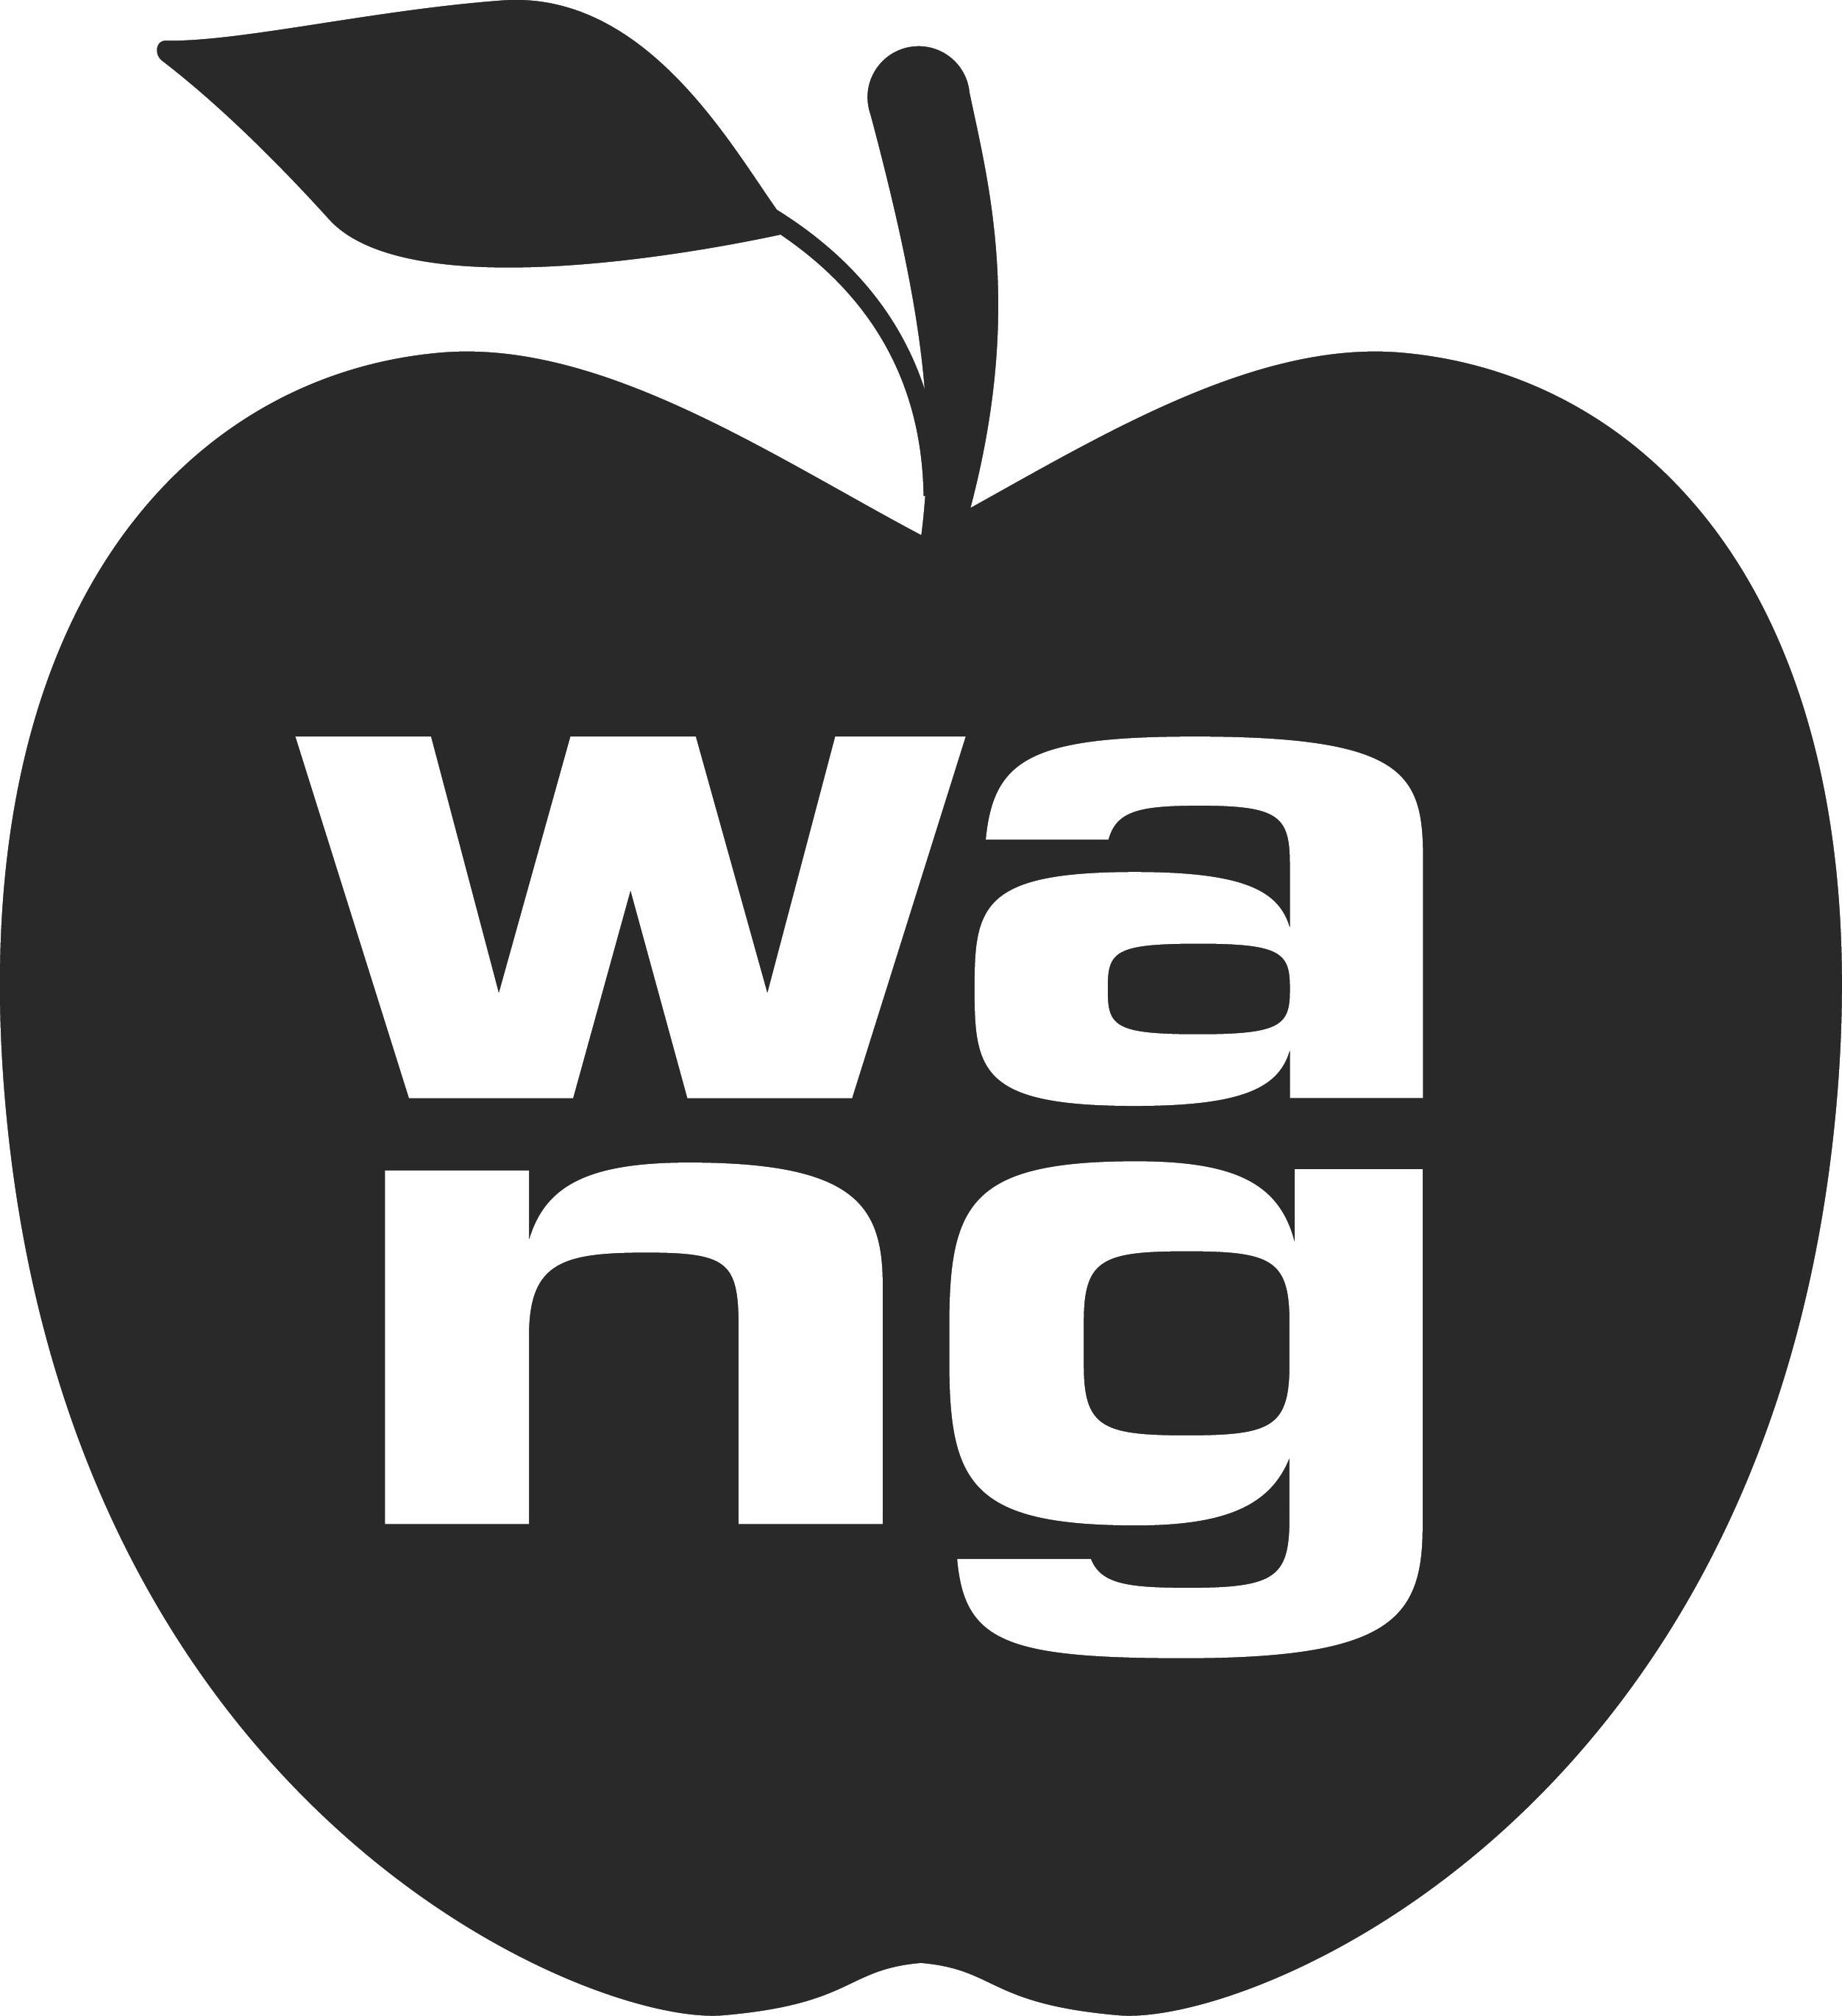 Trademark Logo WANG